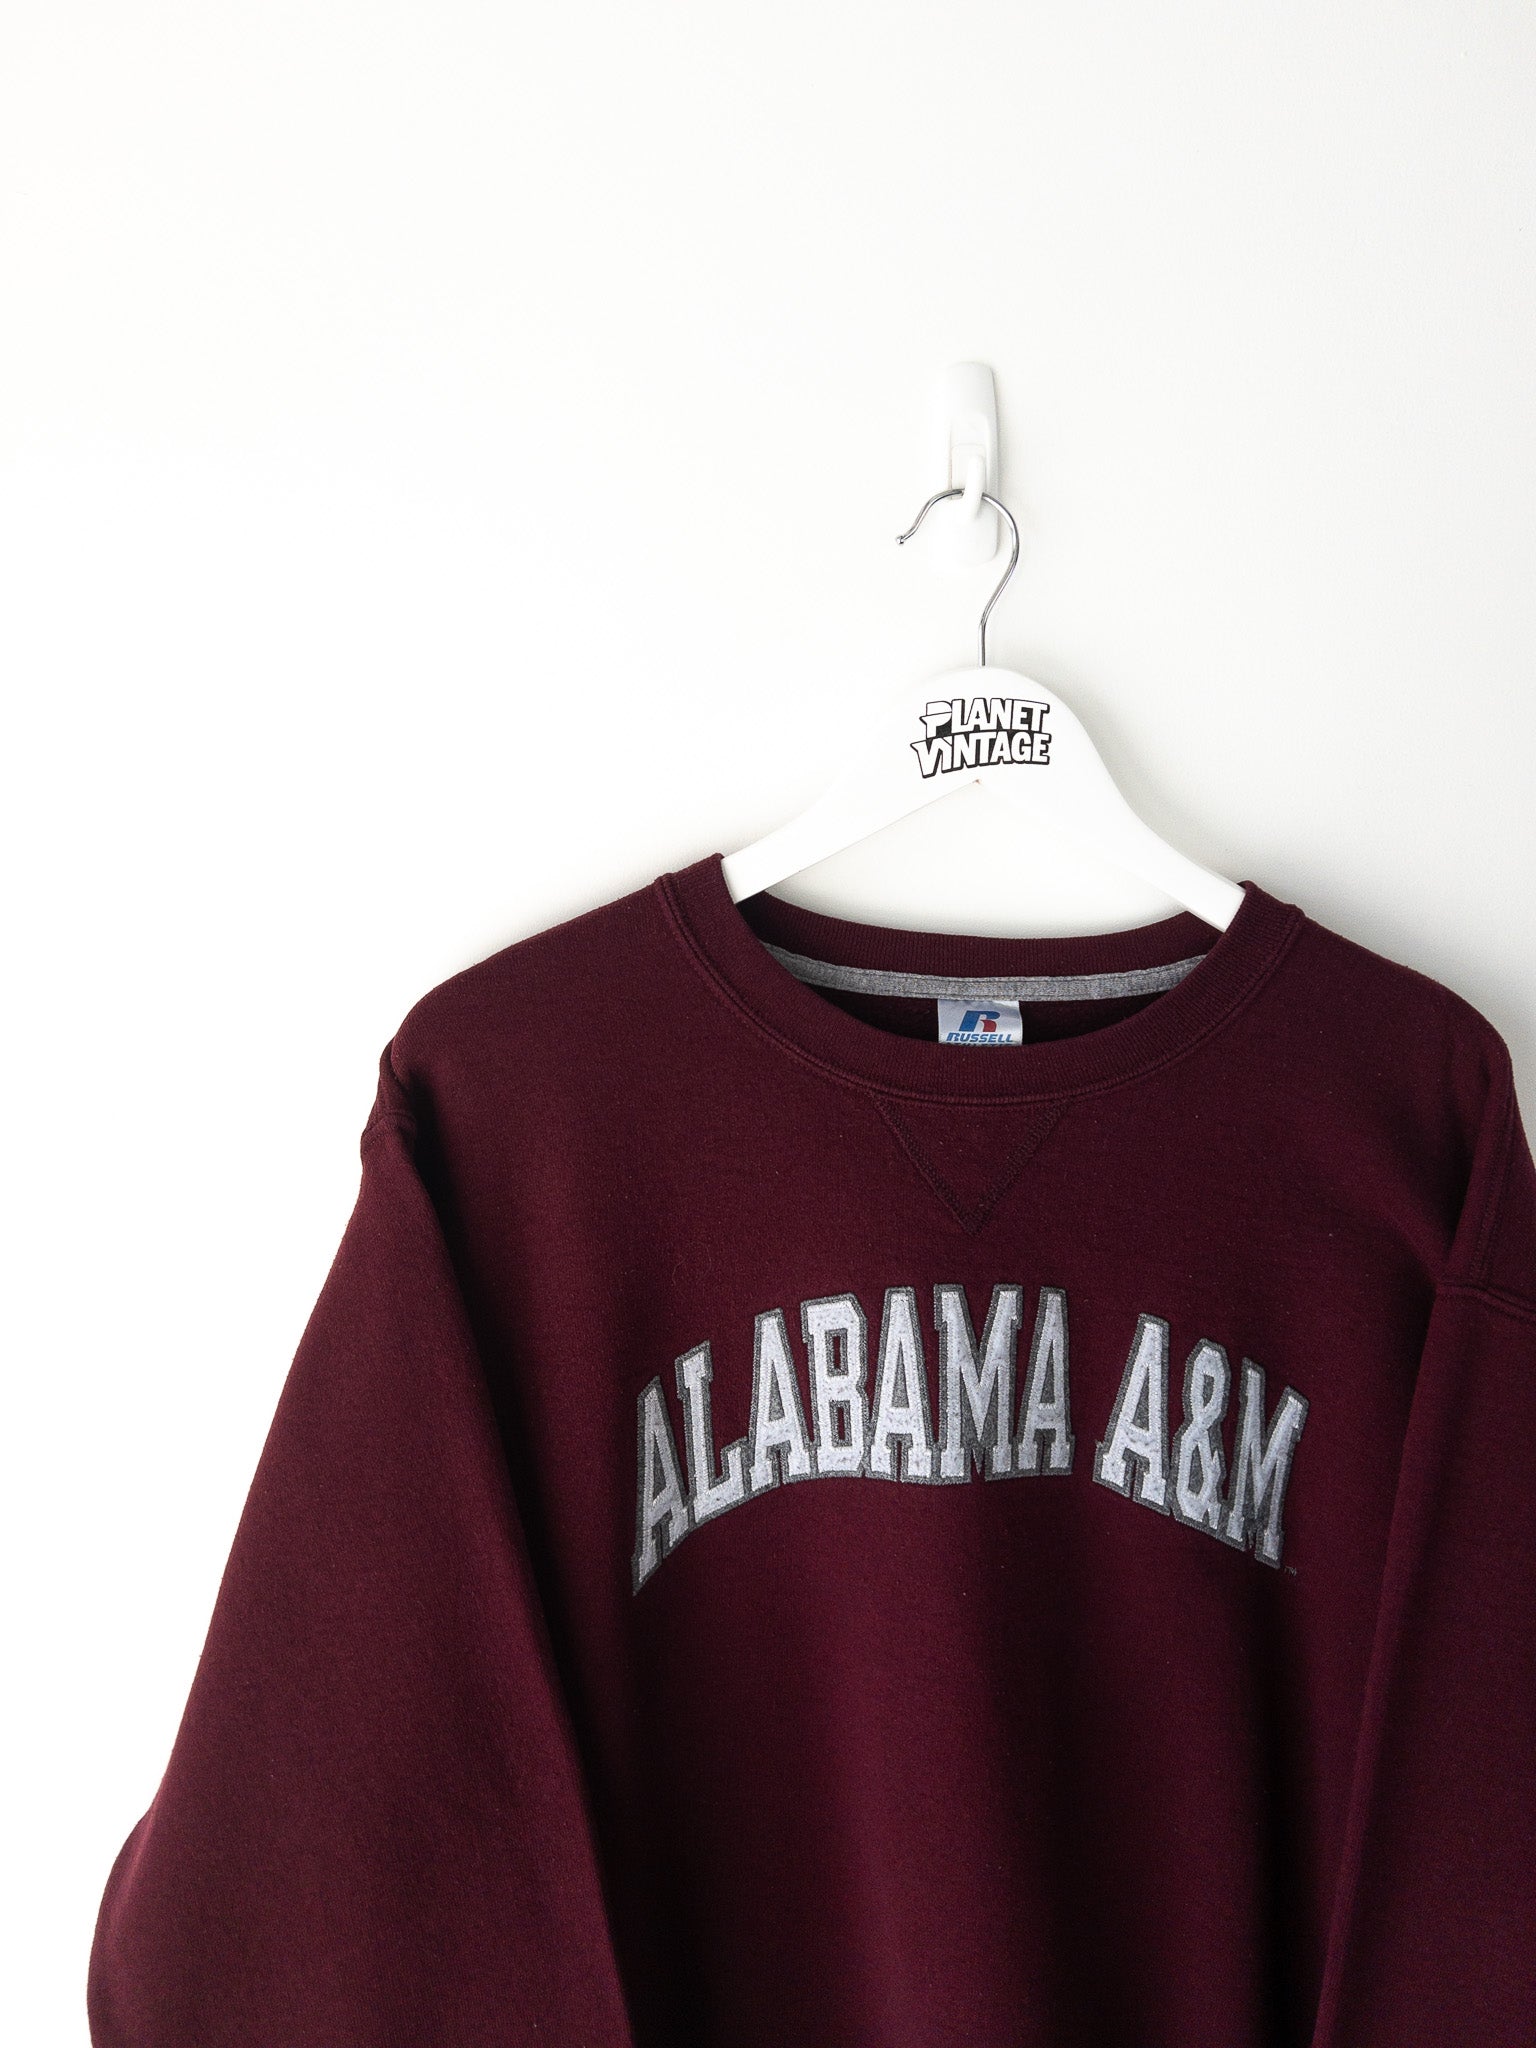 Vintage Alabama A&M University Sweatshirt (L)